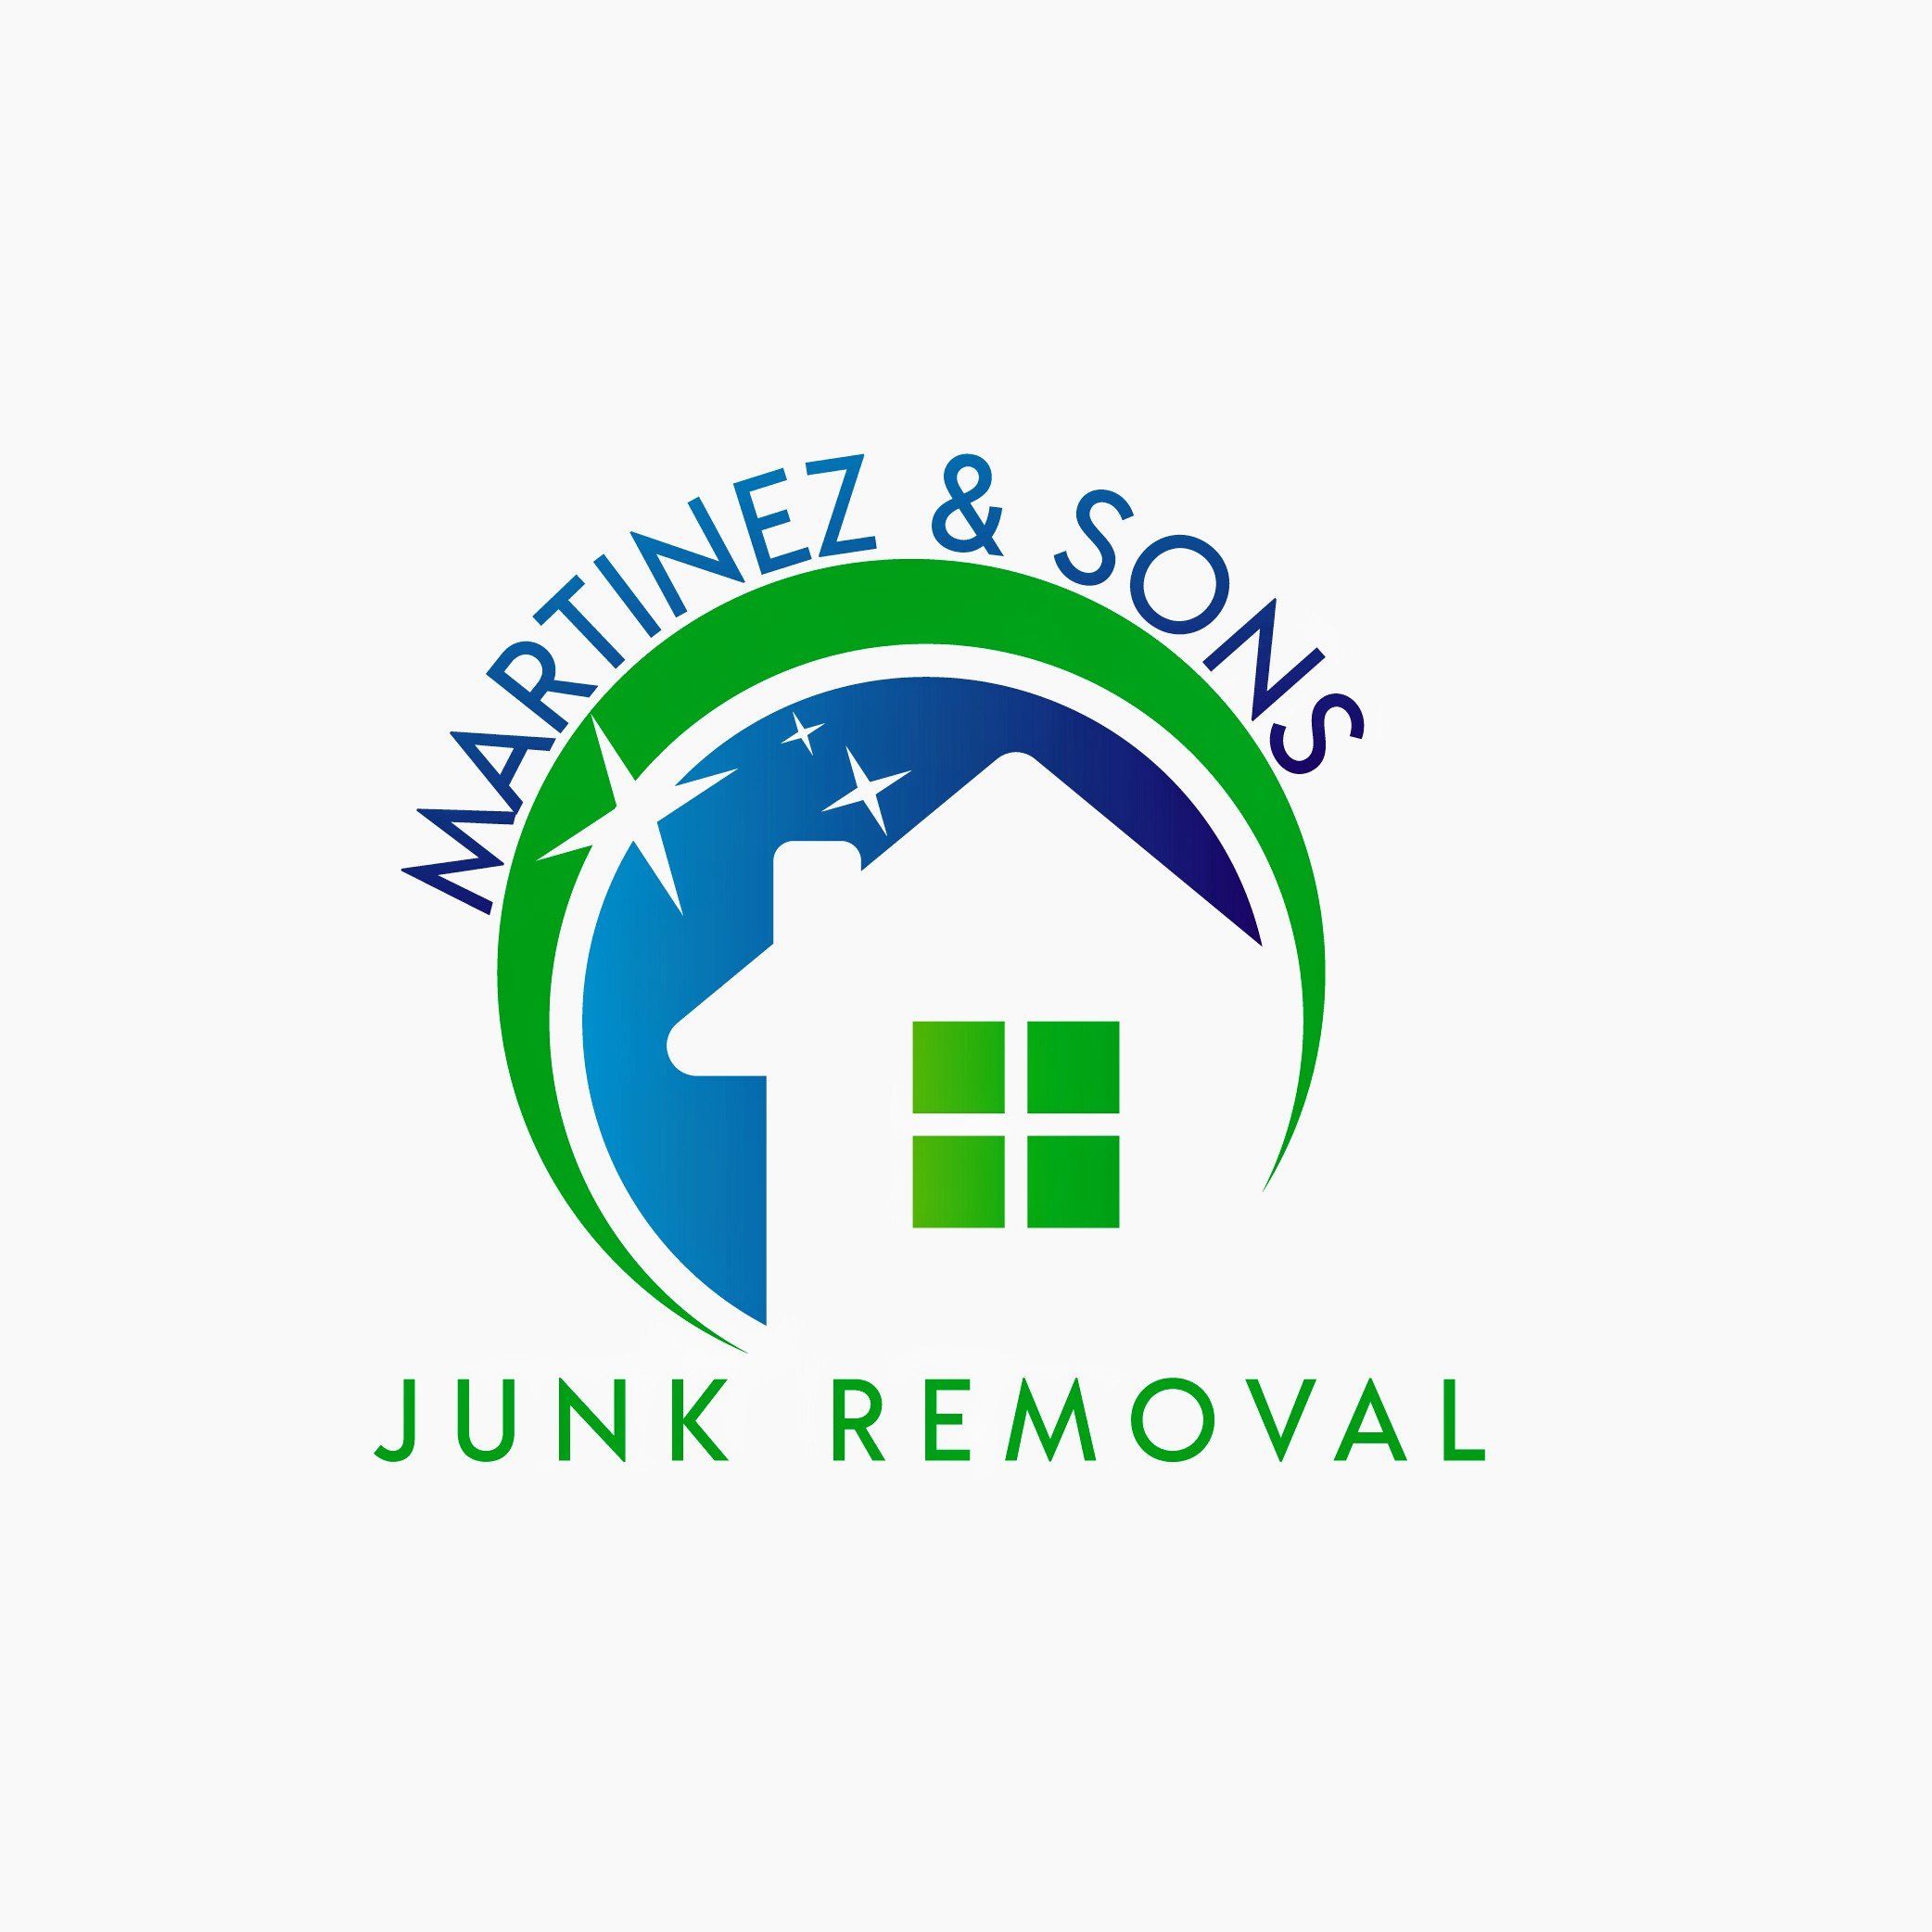 Martinez & Son's Junk Removal Logo